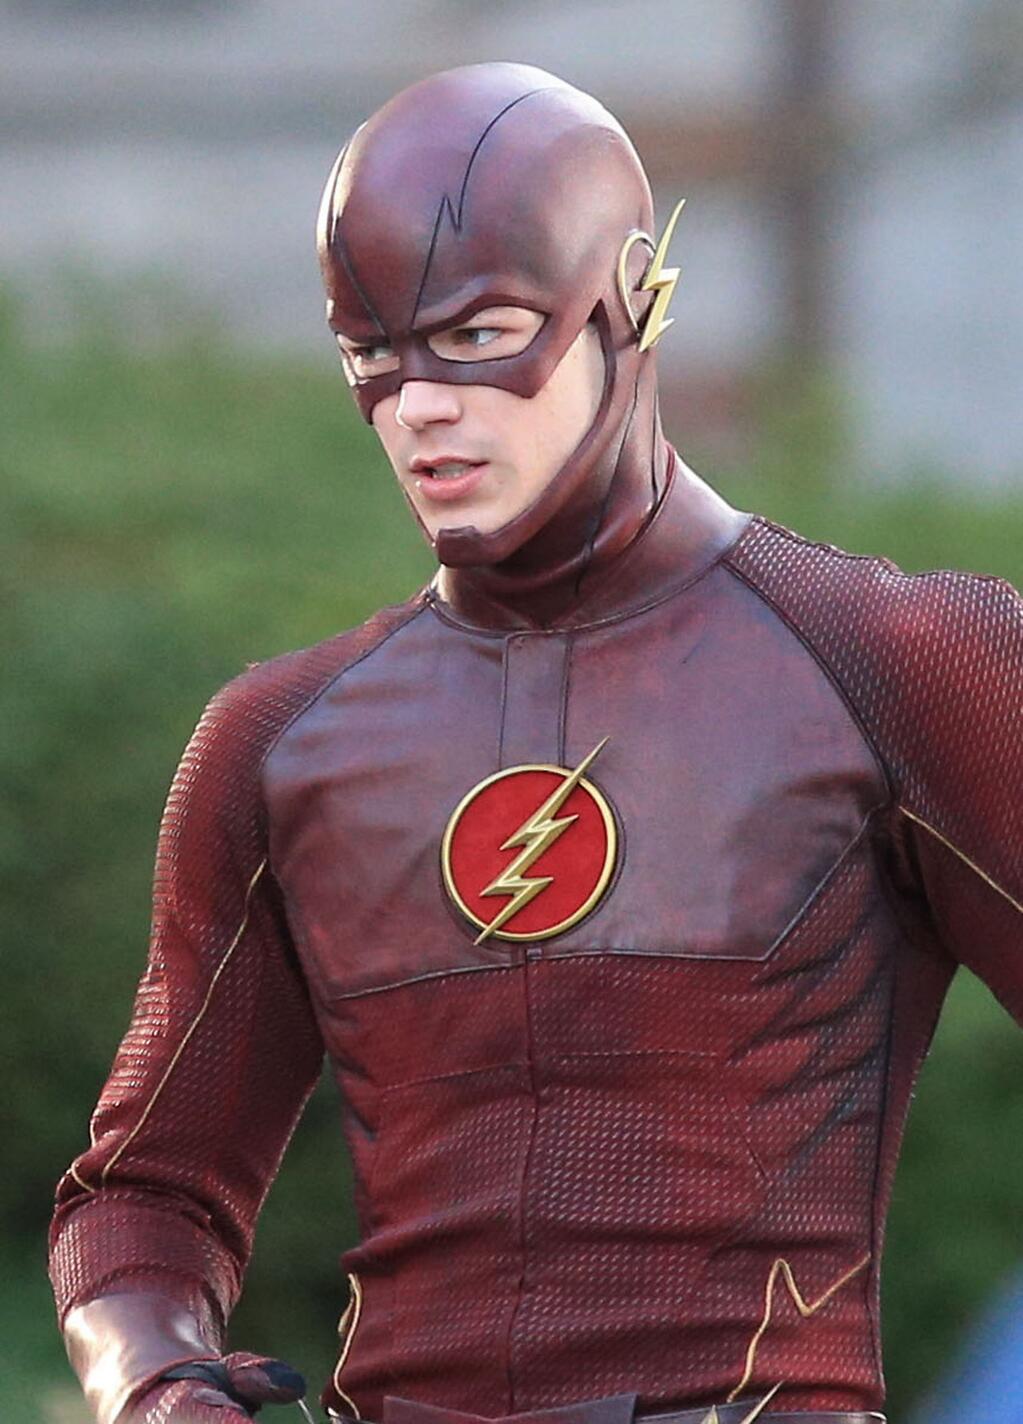 The Flash - Costume - The Flash (CW) Photo (36781384) - Fanpop